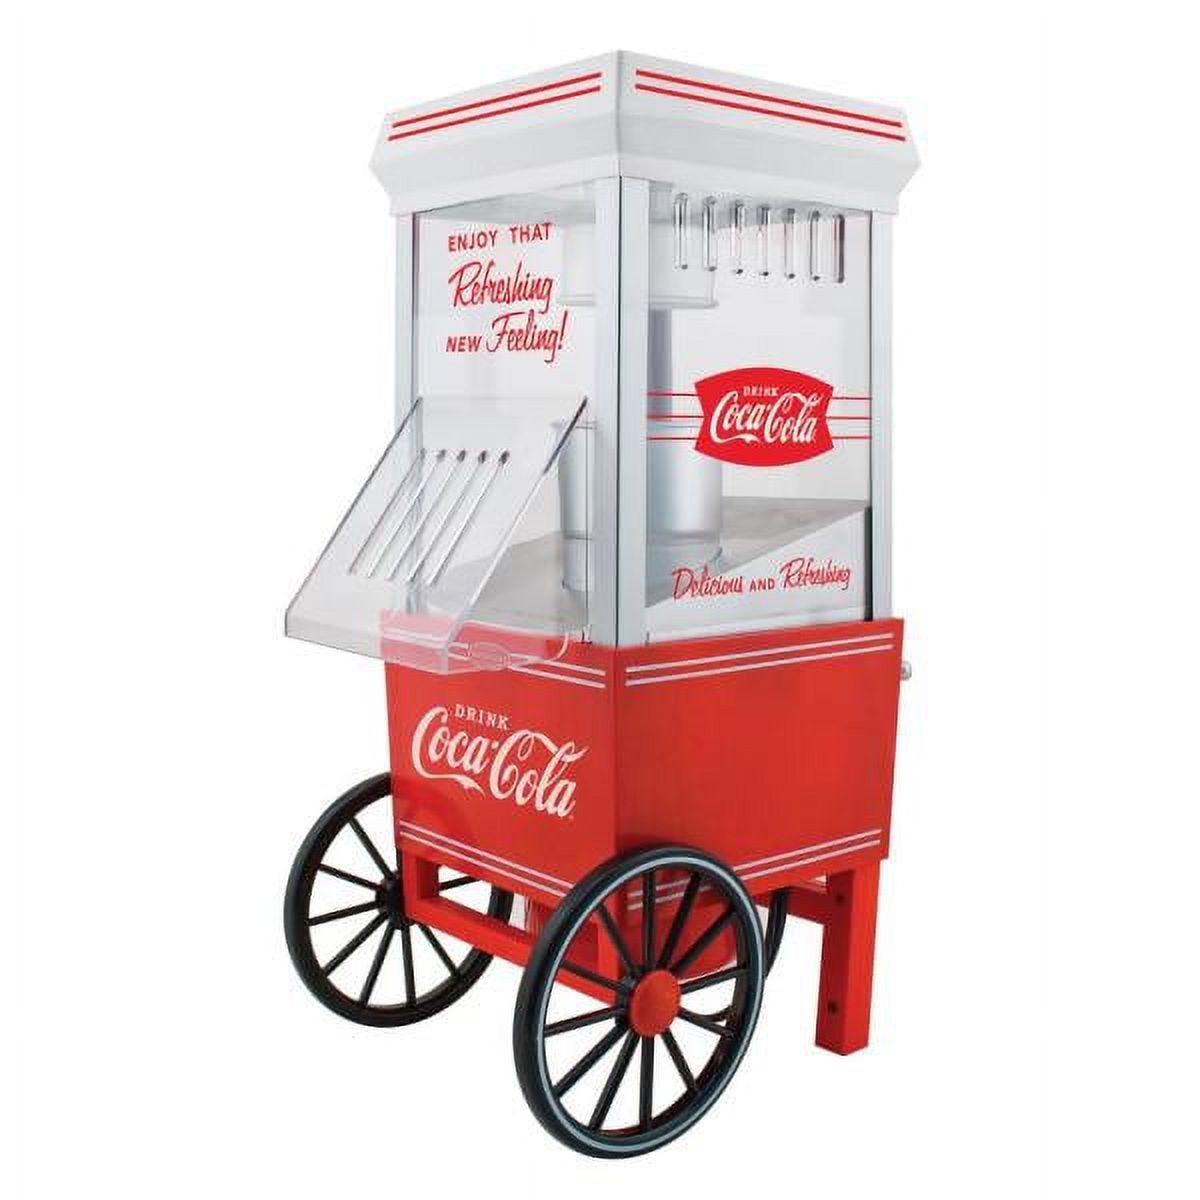 Nostalgia  Coca-Cola 12-Cup Hot Air Popcorn Maker, Red, OFP501COKE - image 1 of 8